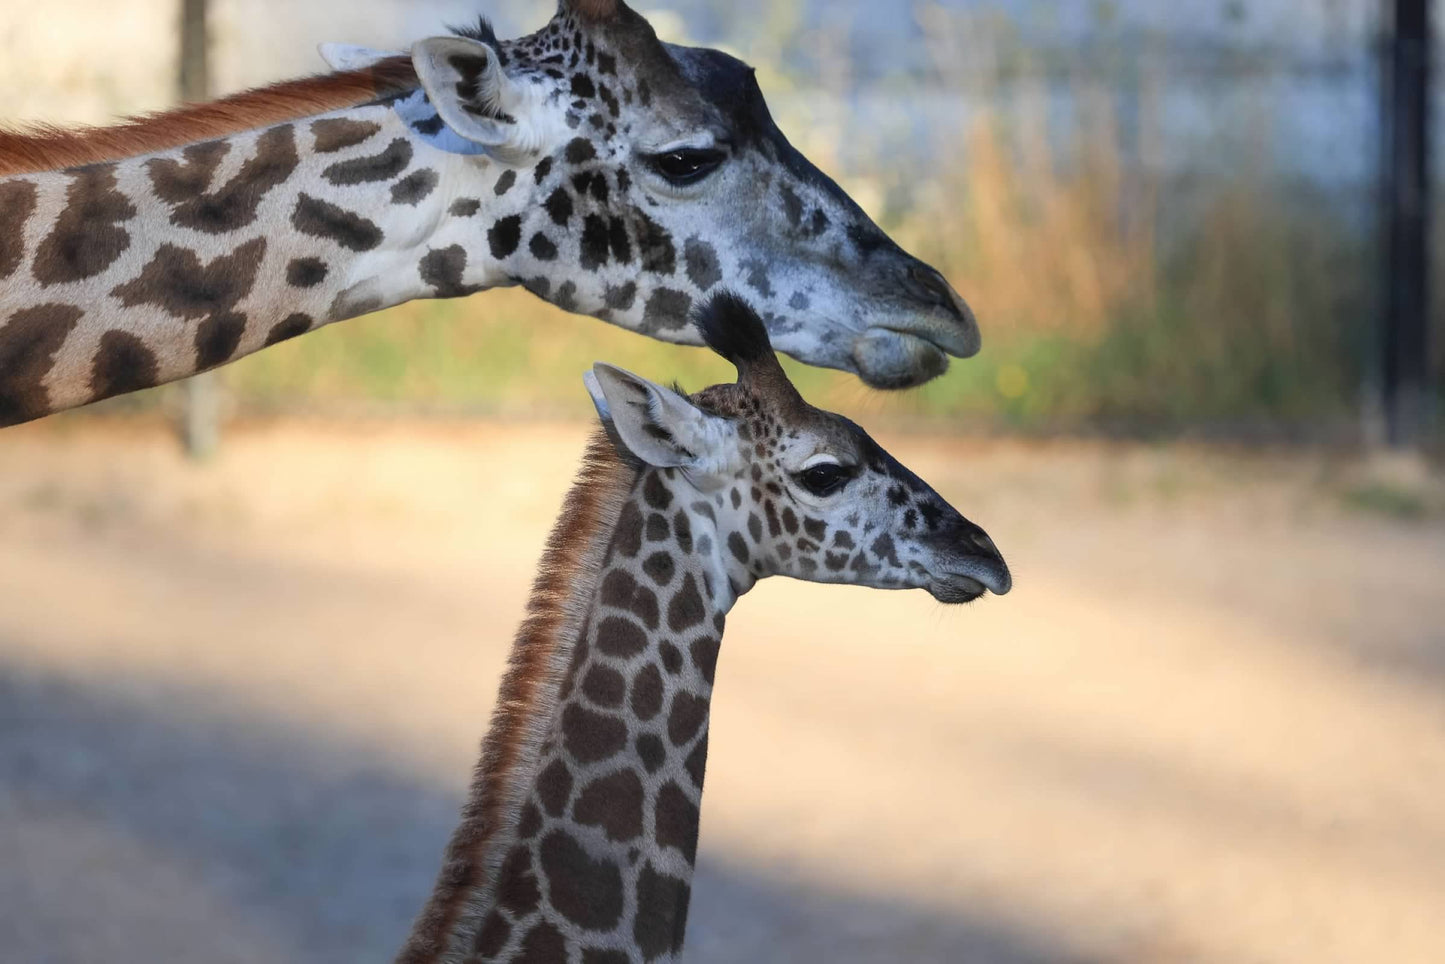 Adopt a Masai Giraffe